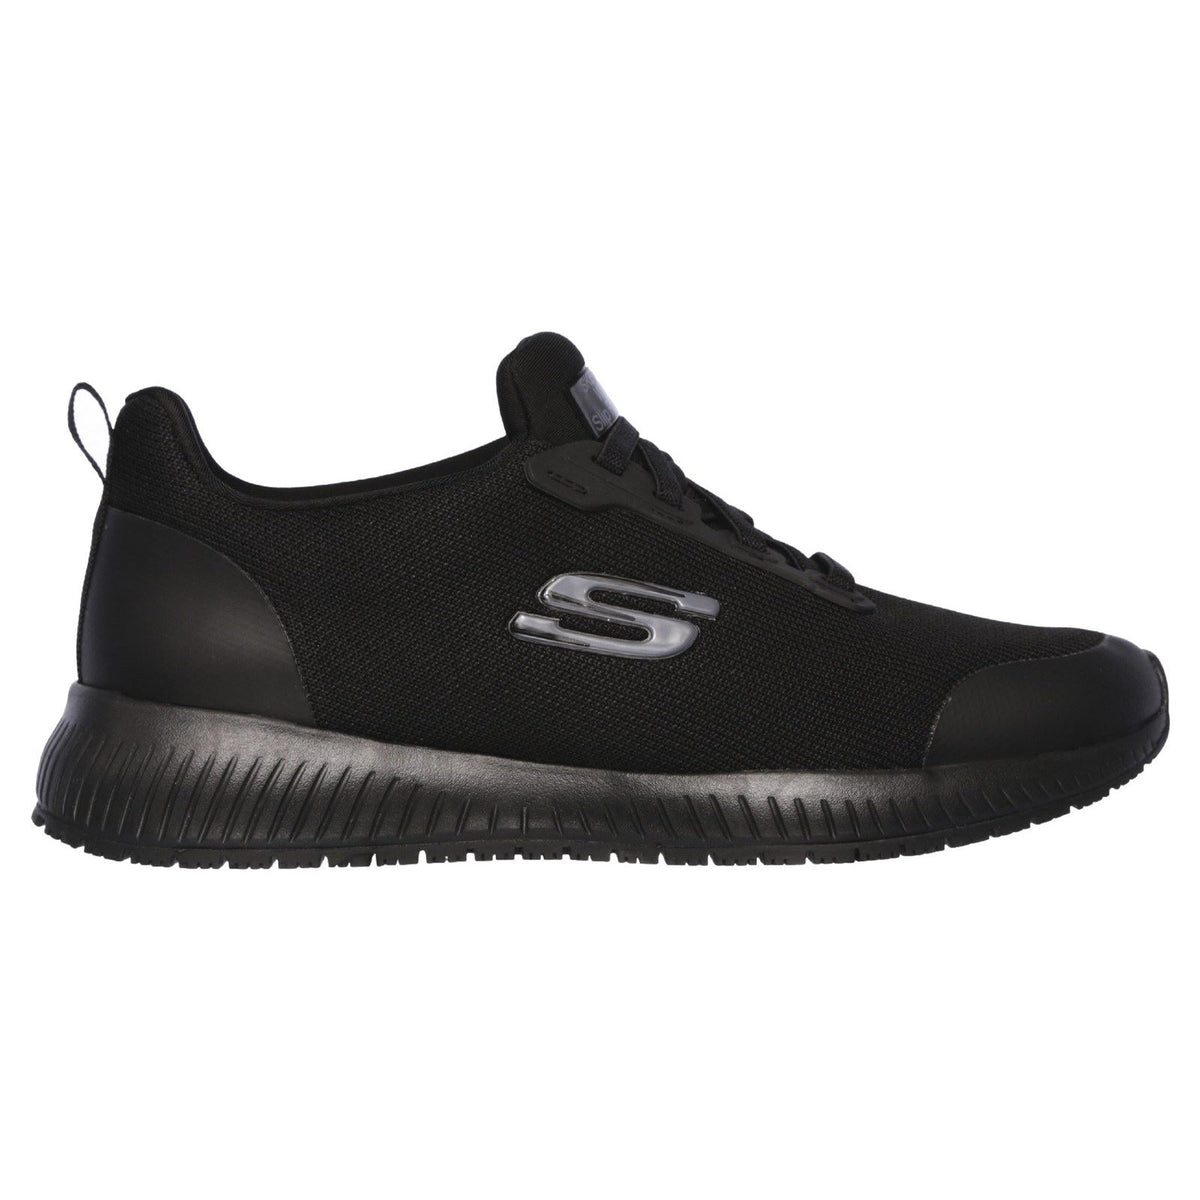 Skechers Squad SR Occupational Shoes